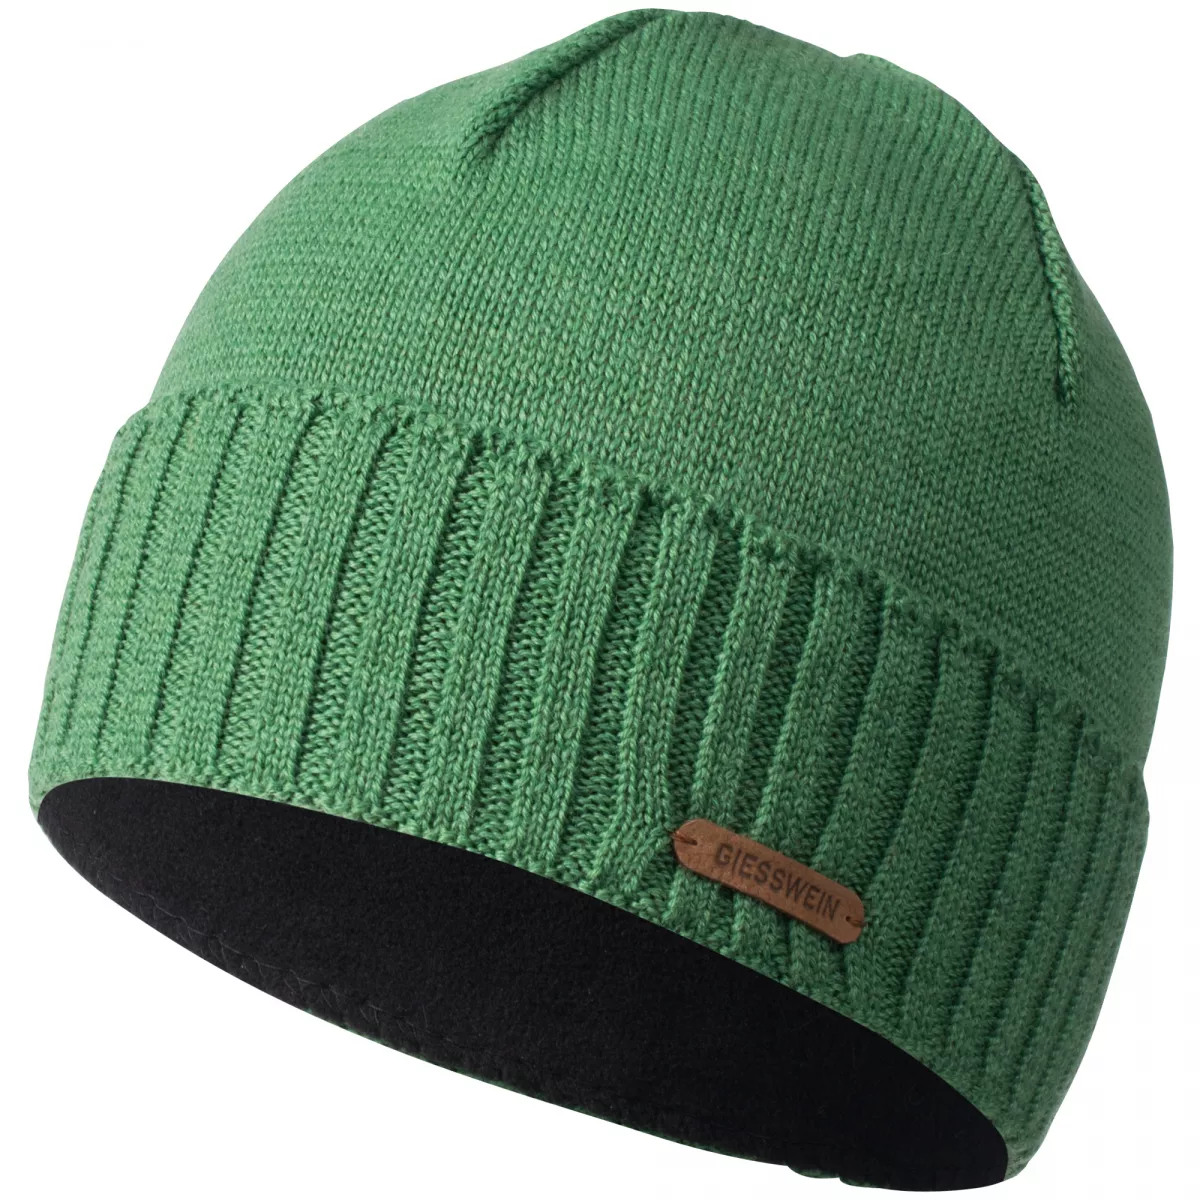 Caciula lana merino, model Wildgrat, verde